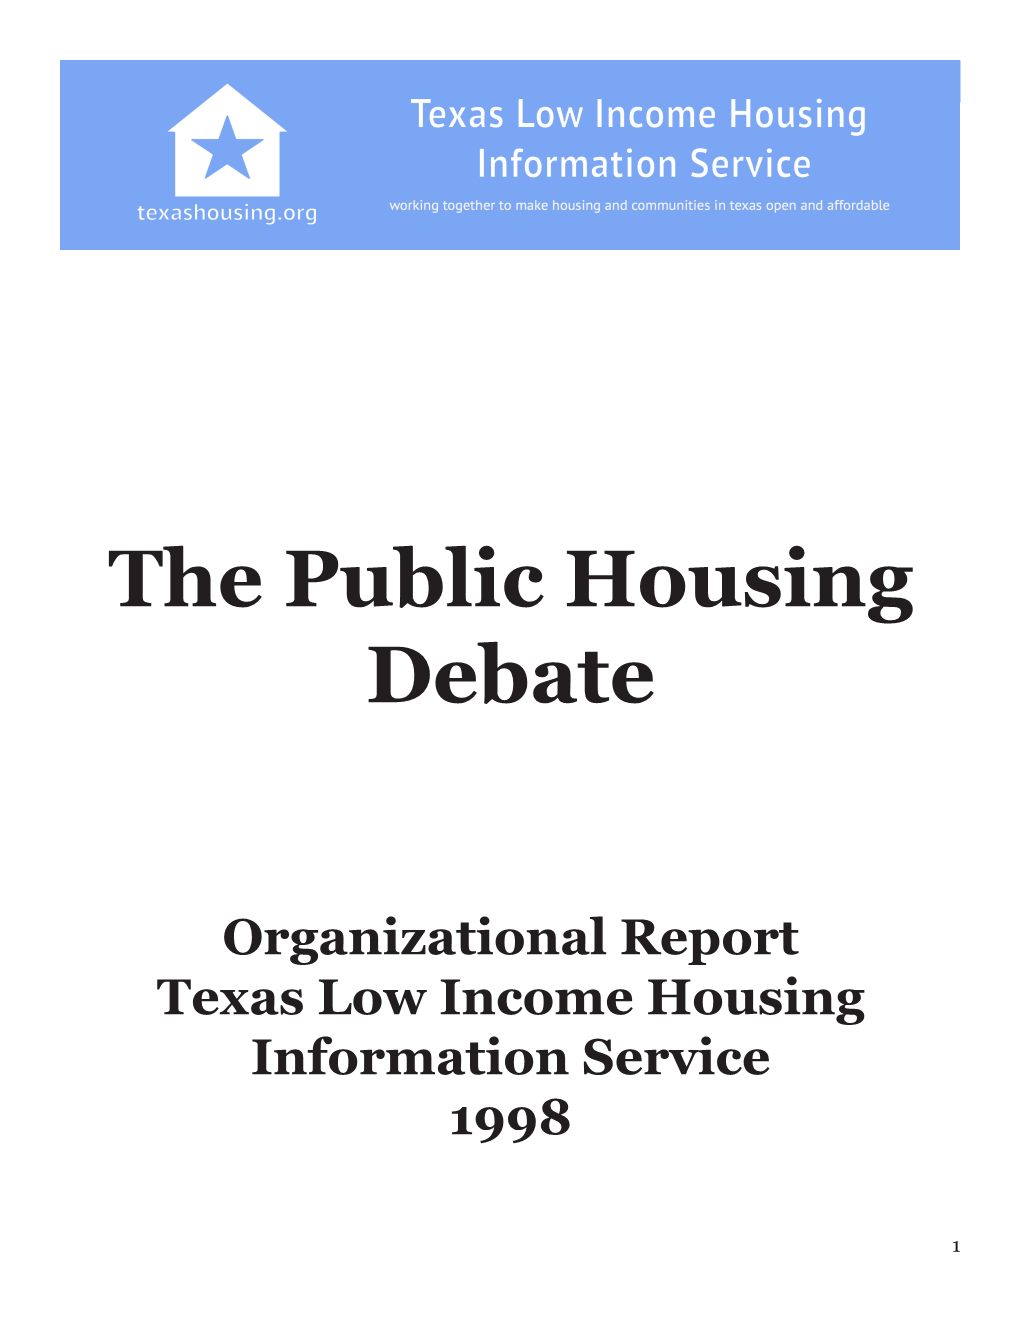 The Public Housing Debate